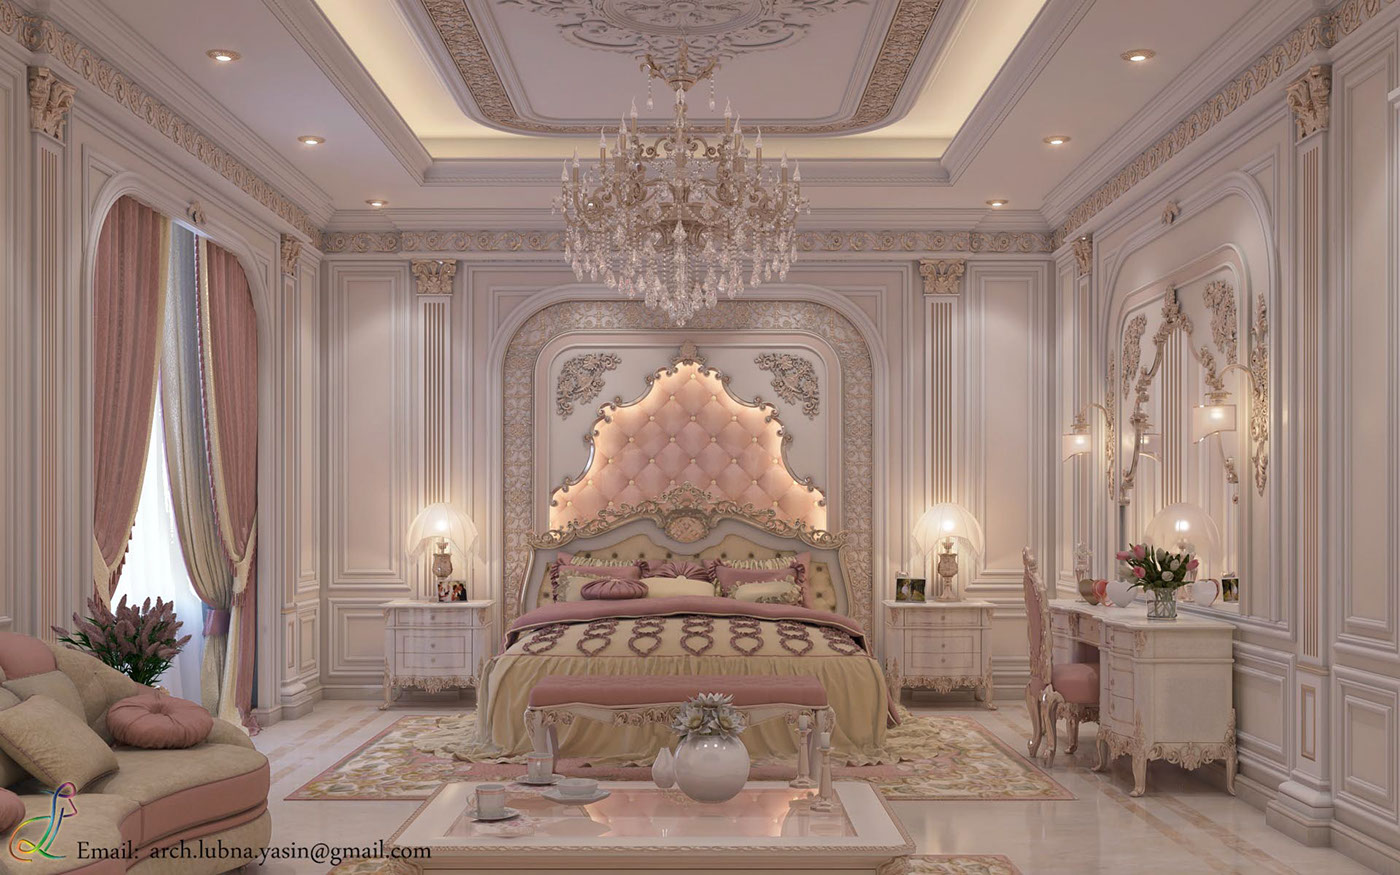 Interior luxury bedroom design architecture